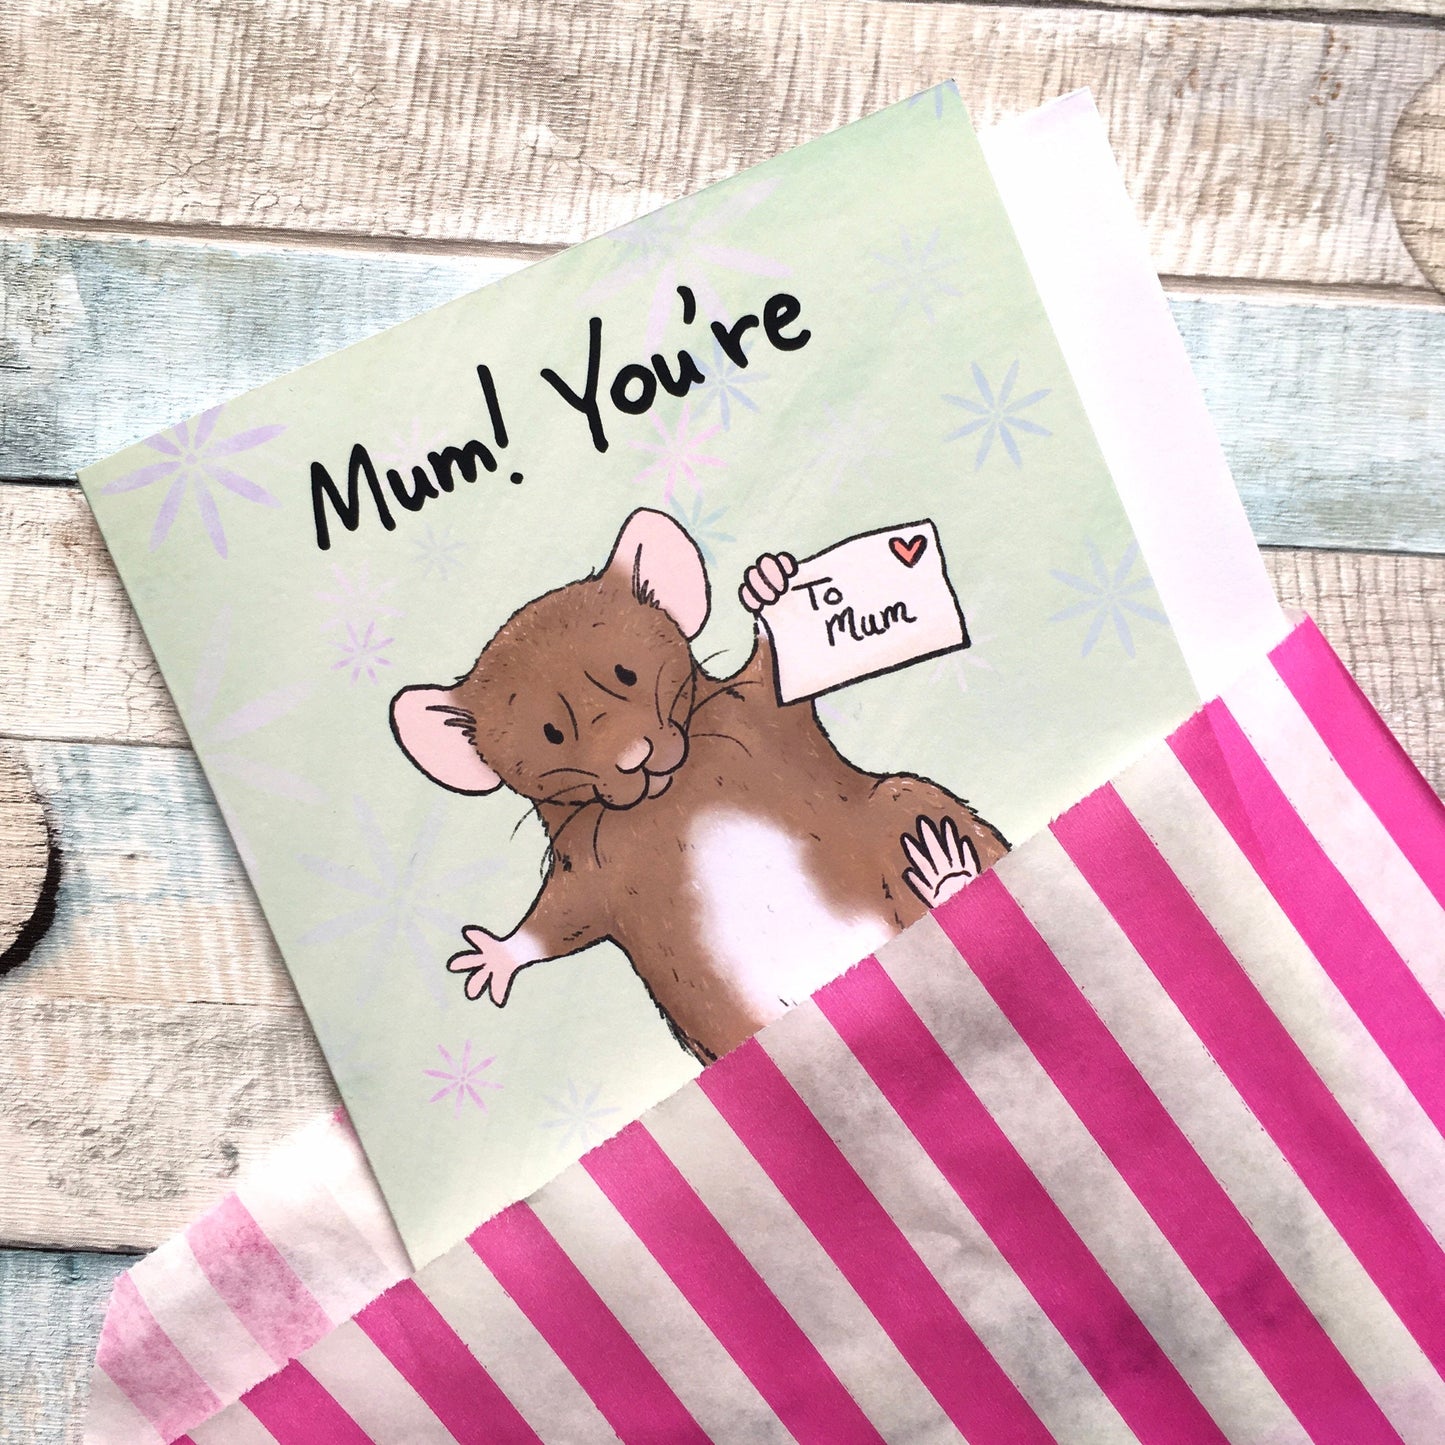 Mum! You're Rat-Tastic Pet Rat Blank A6 Sized Greeting Card, Rat Mum Card, Cute Fancy Rat Gift